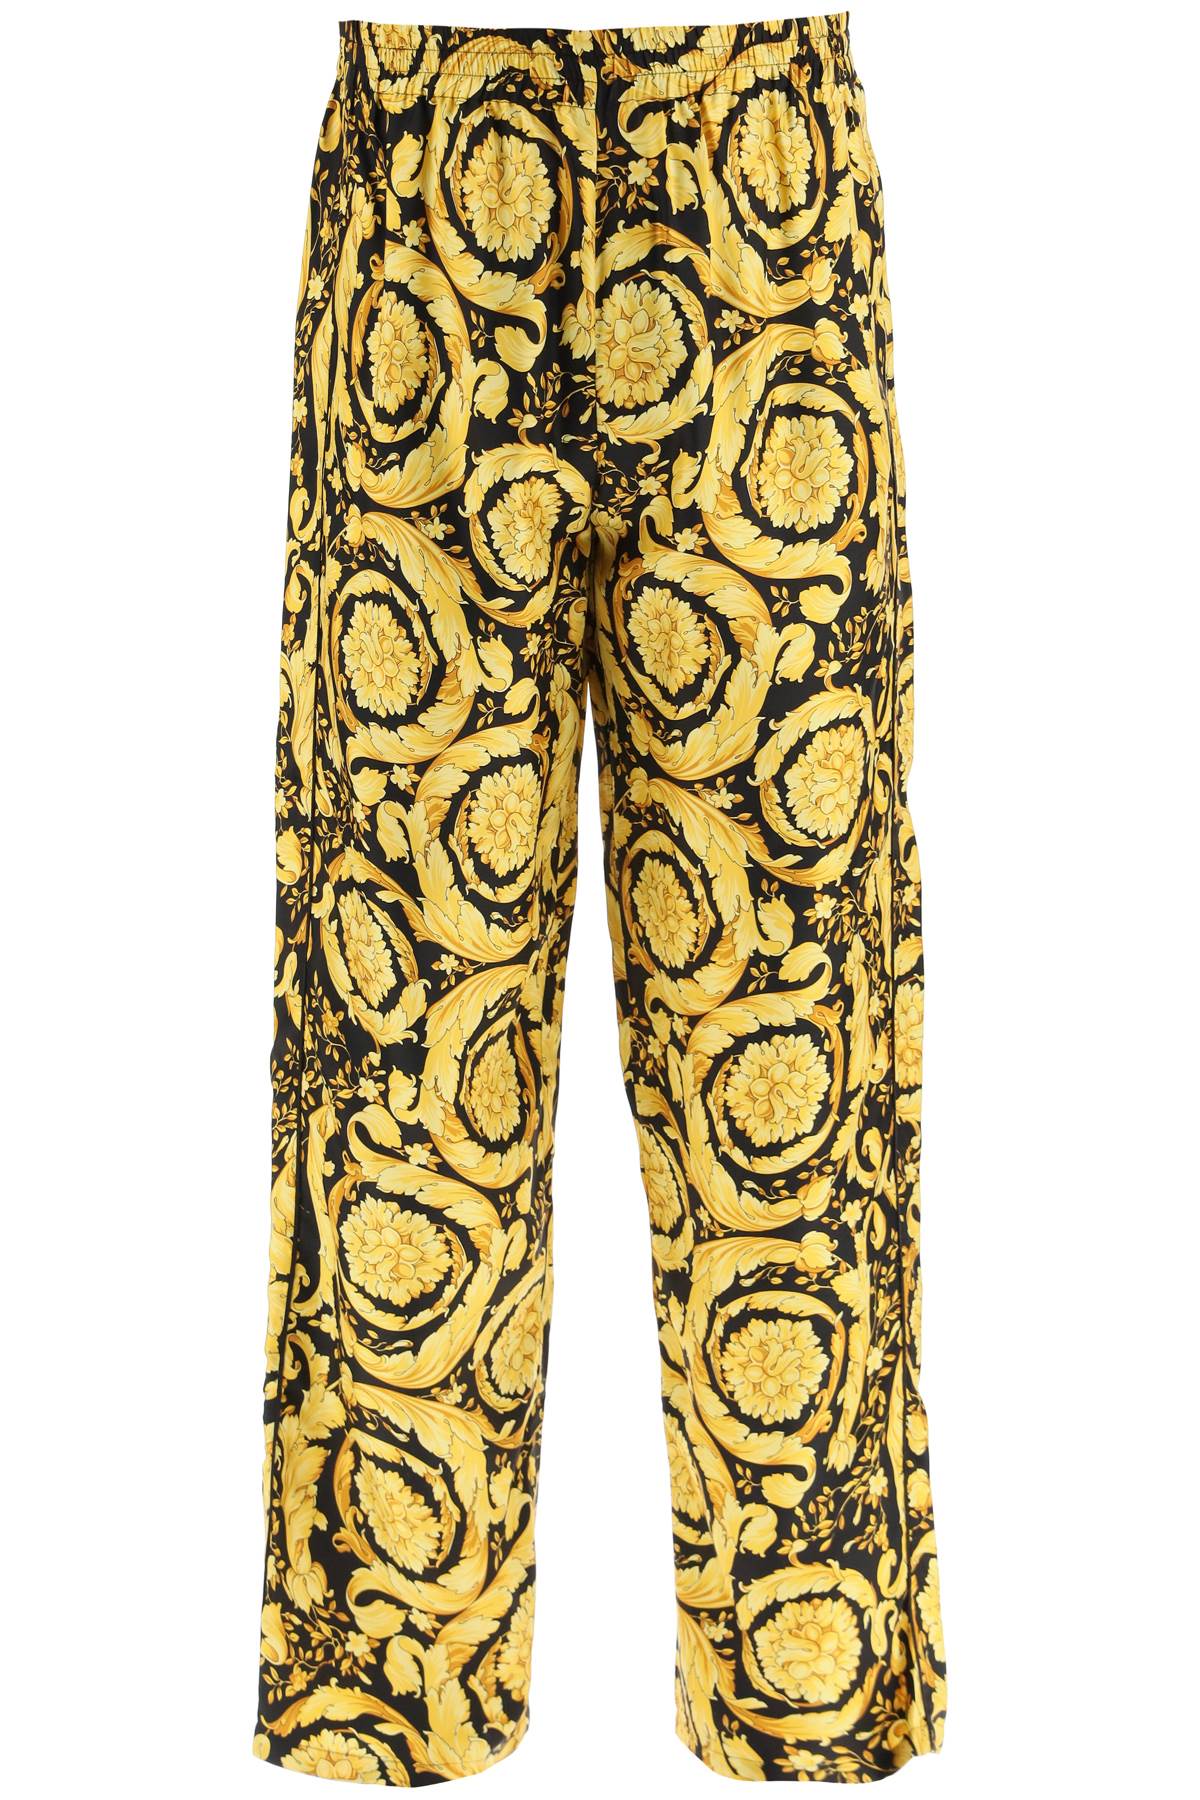 Versace barocco Silk Pajamas Pants